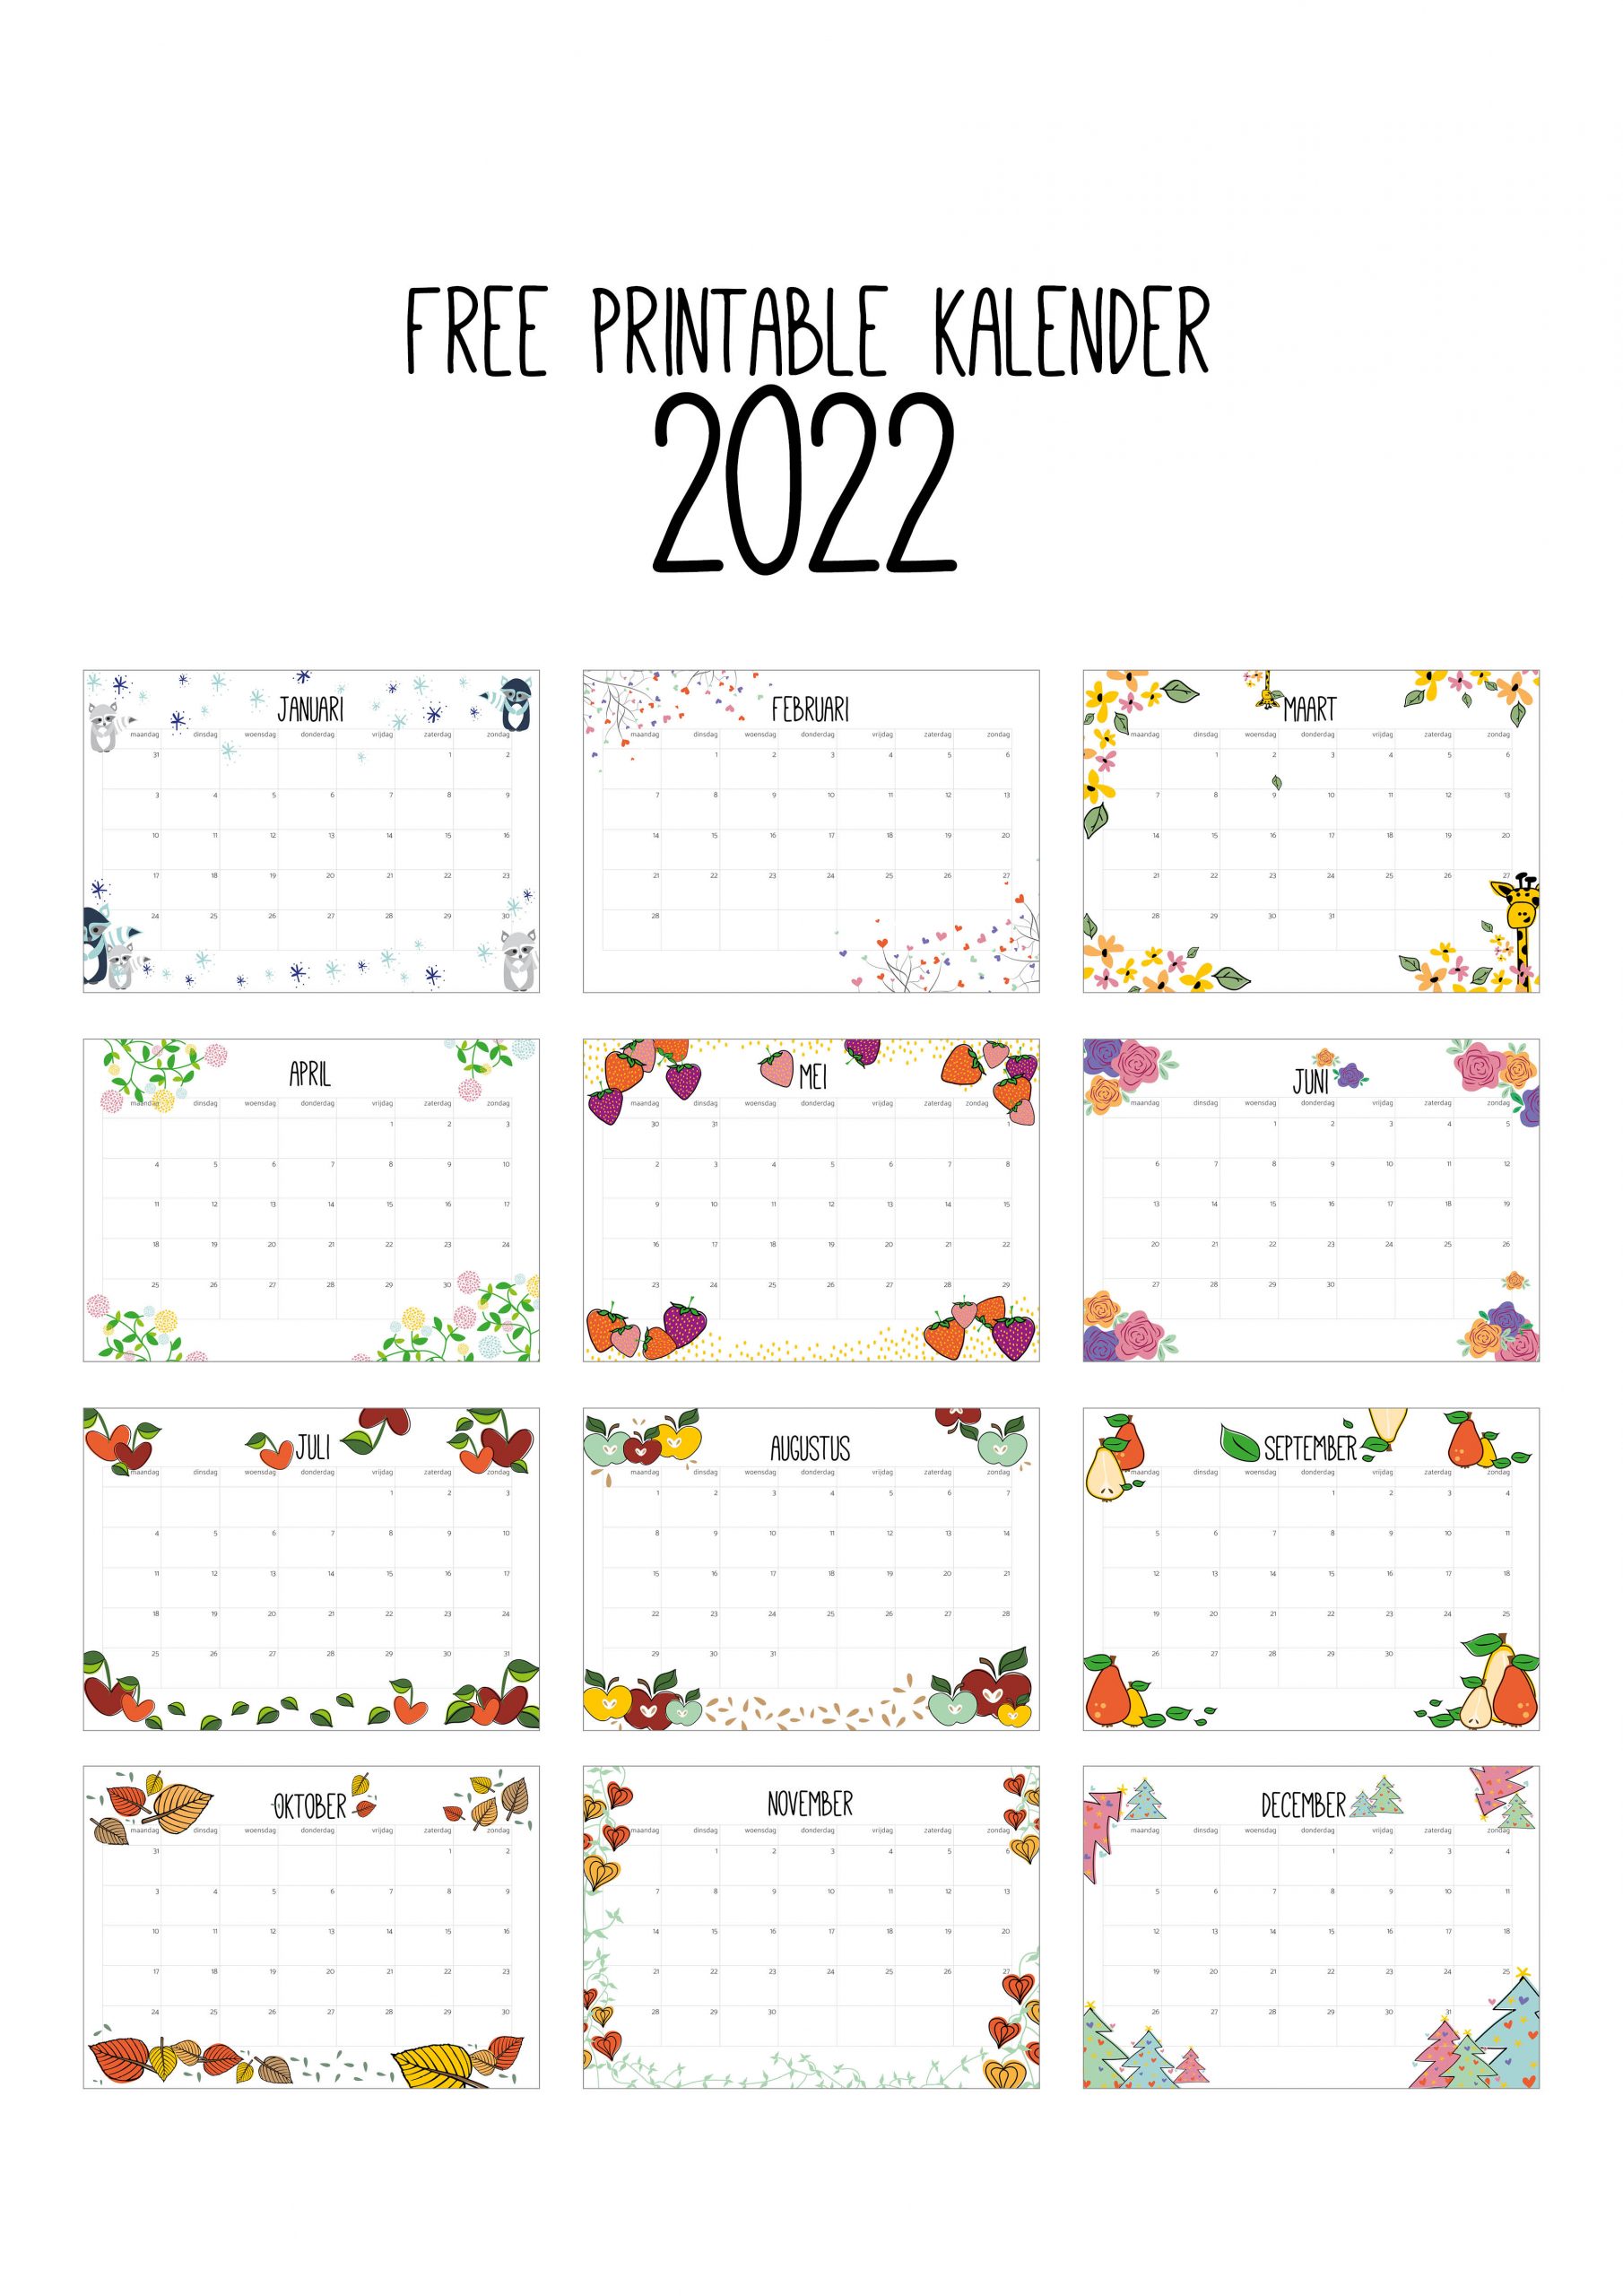 Master diploma calorie Gebeurt Free Printable kalender 2022 - Hip & Hot - blogazine